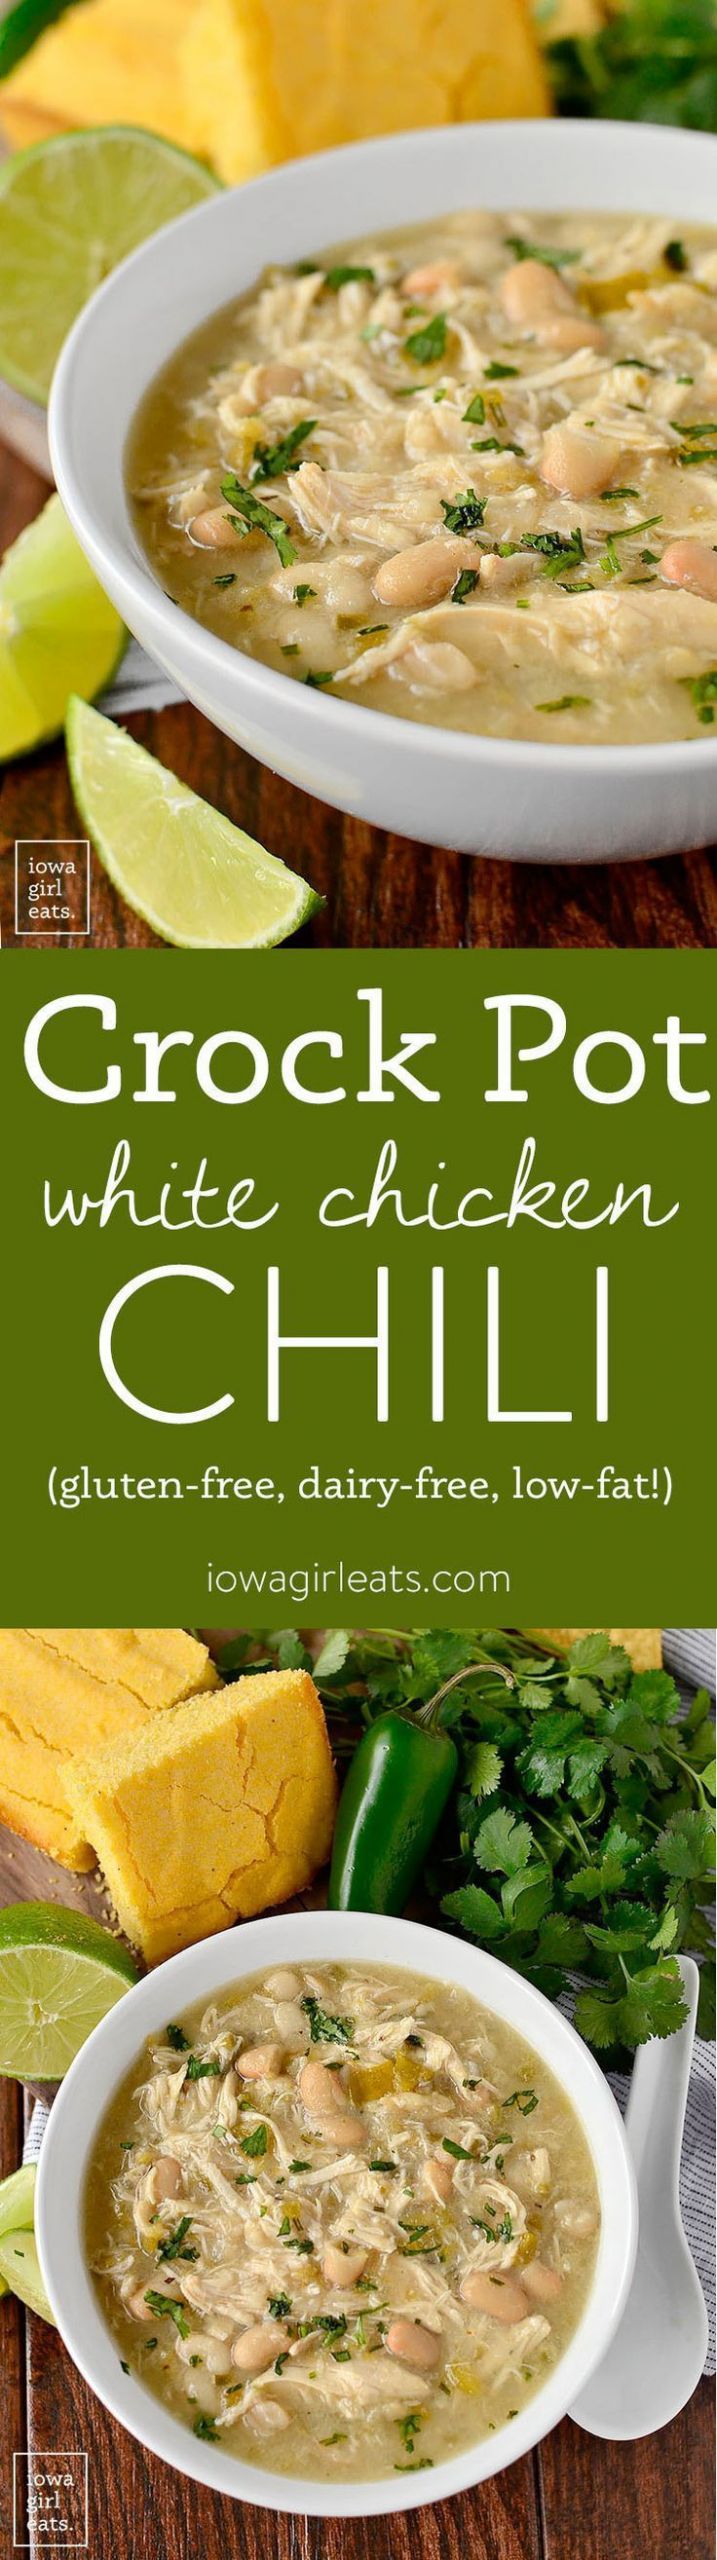 Low Cholesterol Crock Pot Recipes
 Best 35 Low Cholesterol Crock Pot Recipes Best Round Up